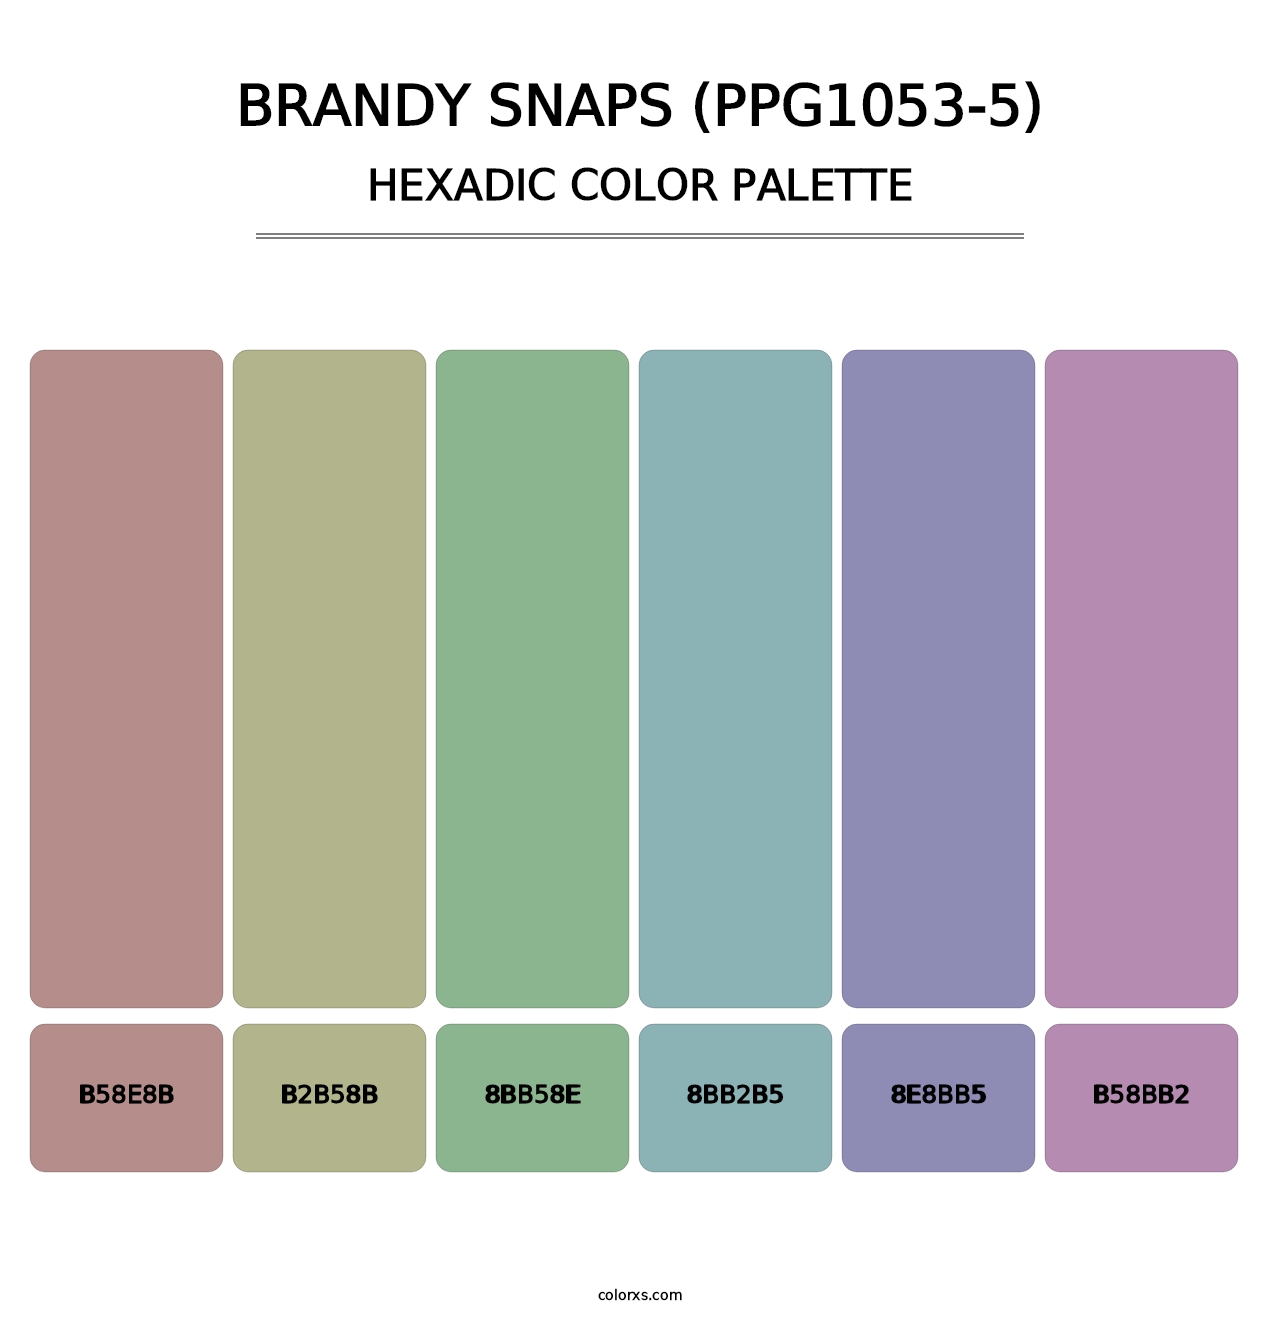 Brandy Snaps (PPG1053-5) - Hexadic Color Palette